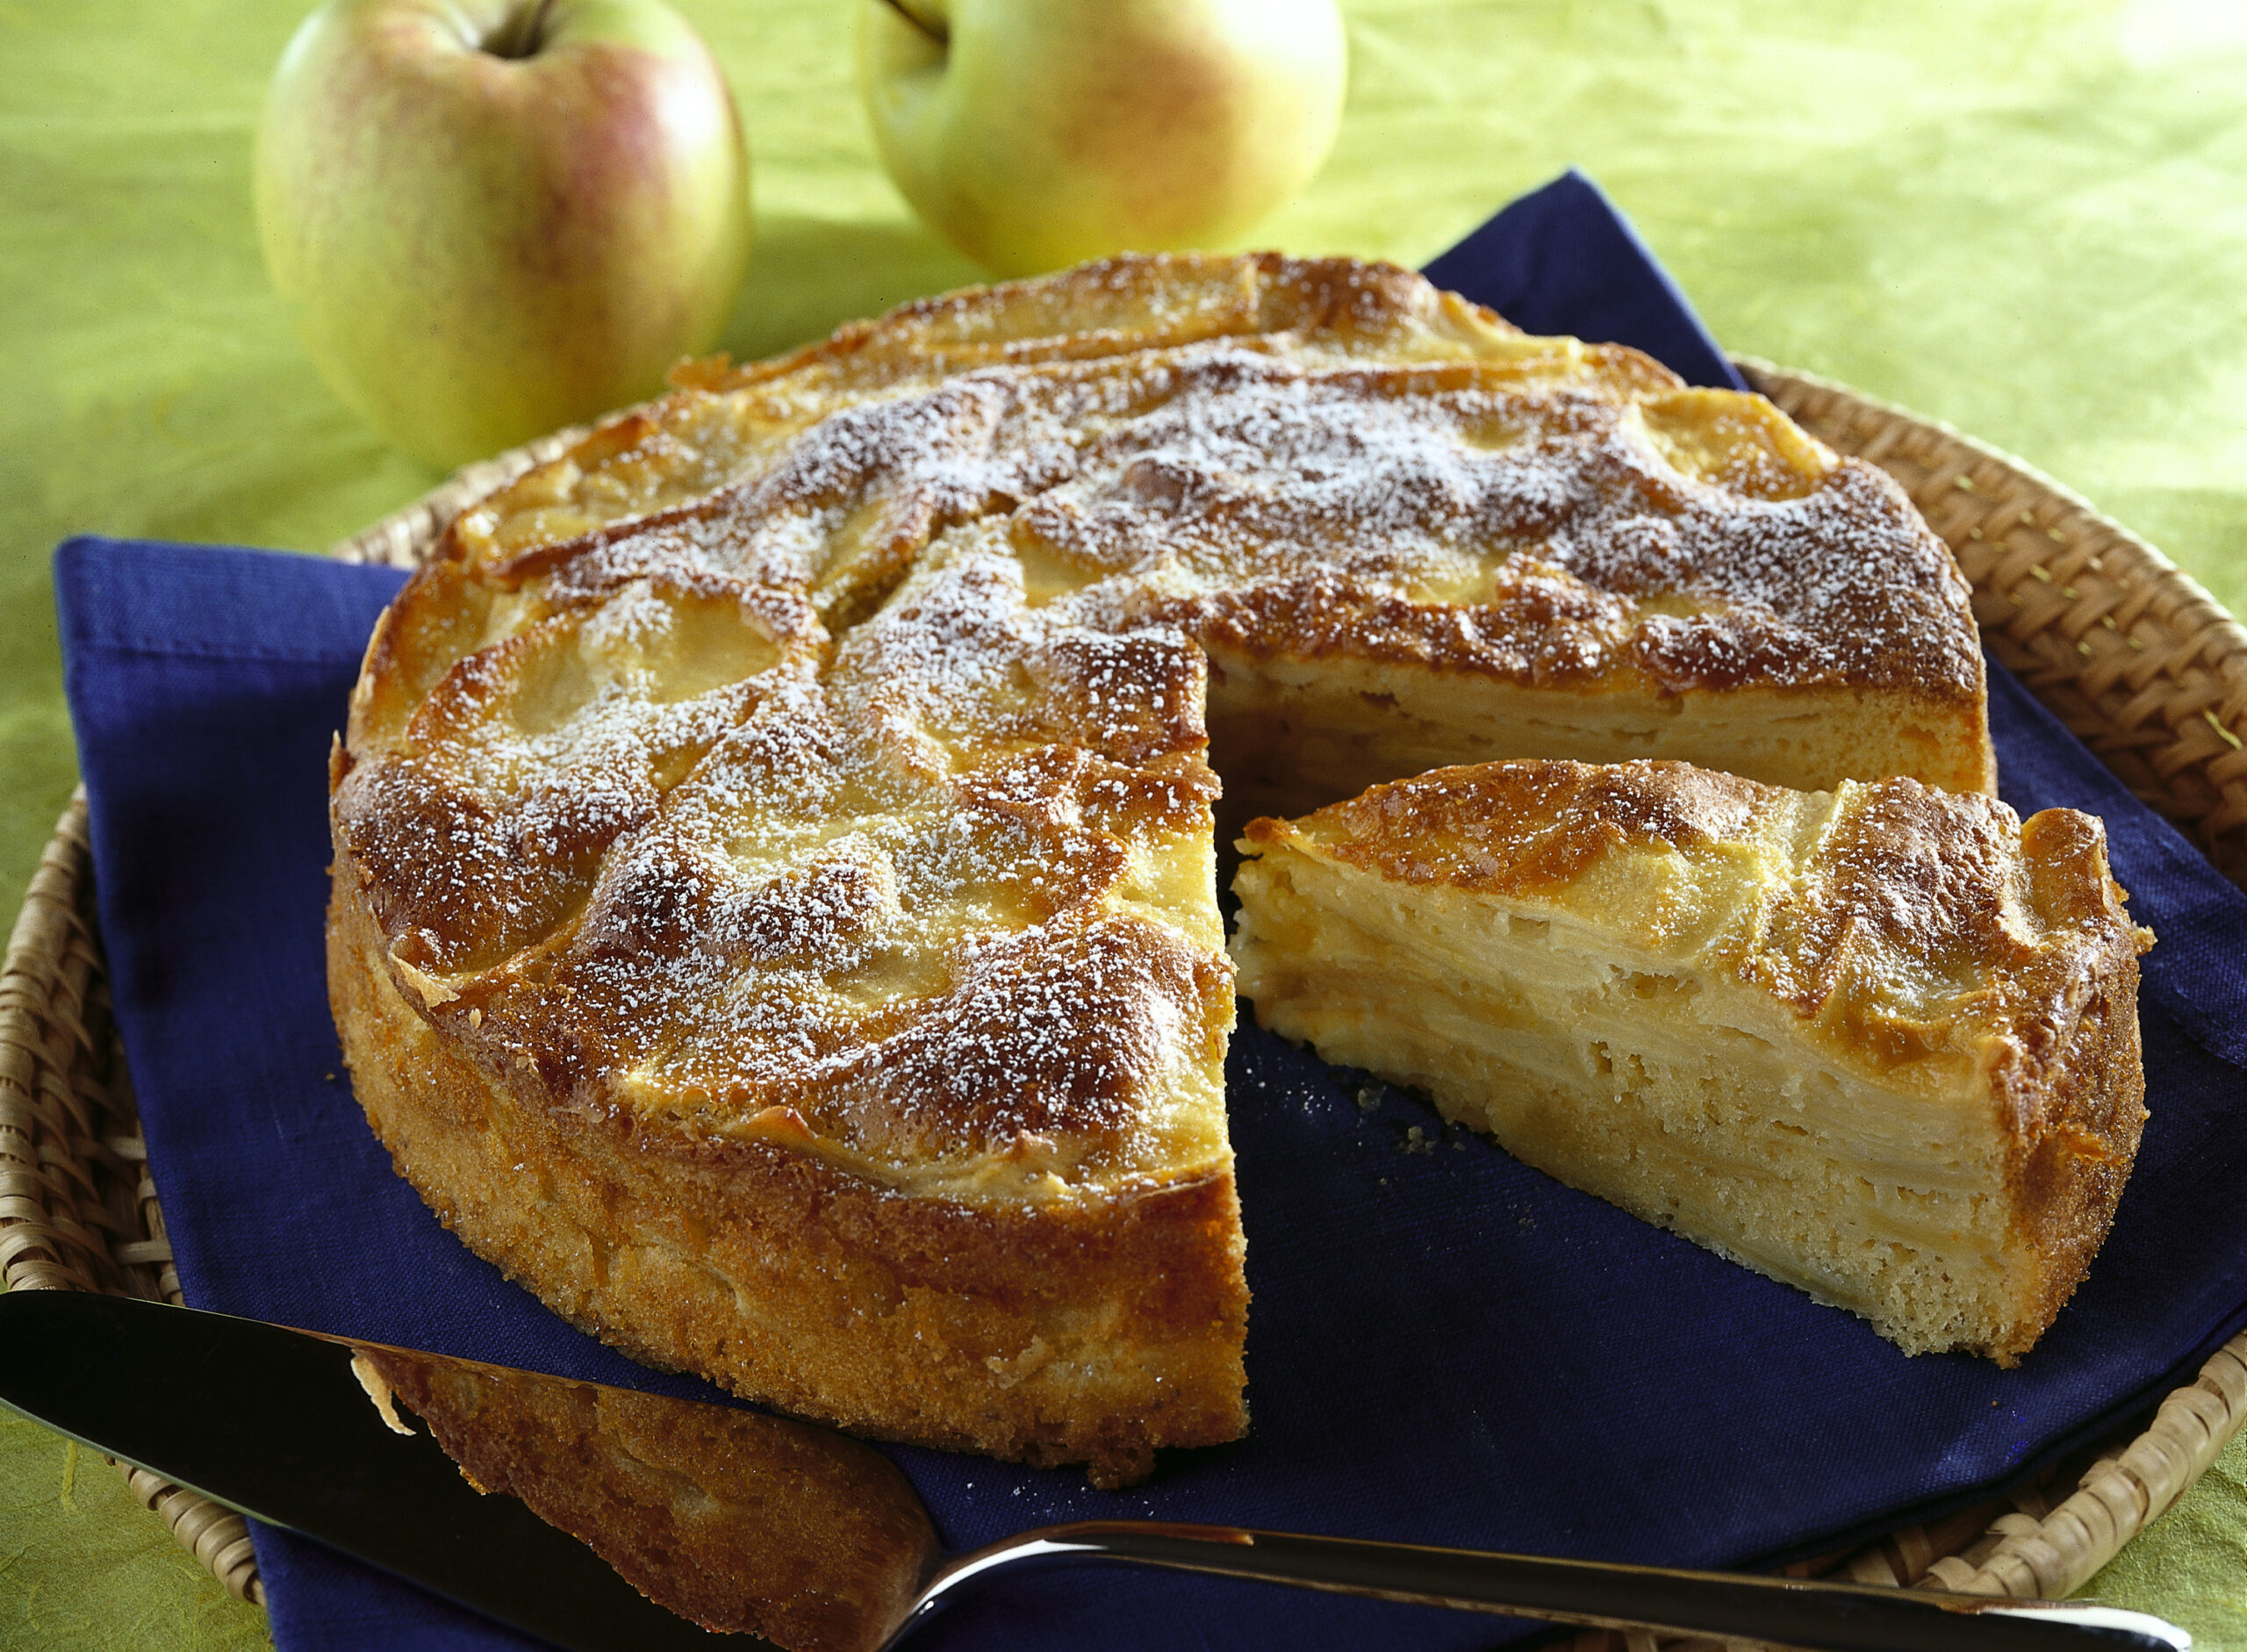 Ricetta torta di mele senza burro: ingredienti, preparazione e consigli ...